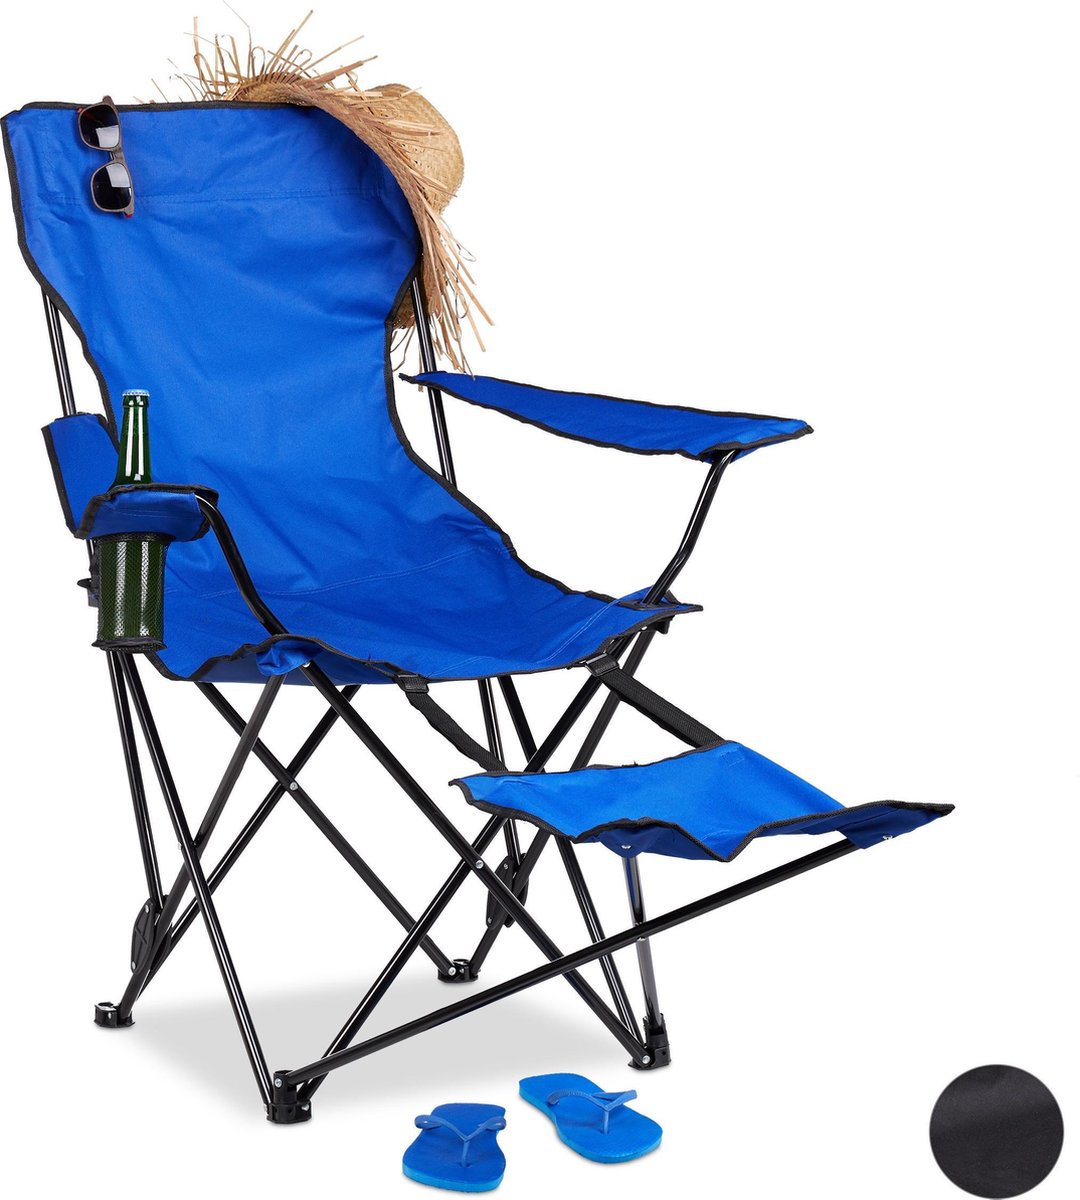 Relaxdays Campingstoel - opvouwbaar - voetensteun - klapstoel - tuinstoel - strandstoel - blauw